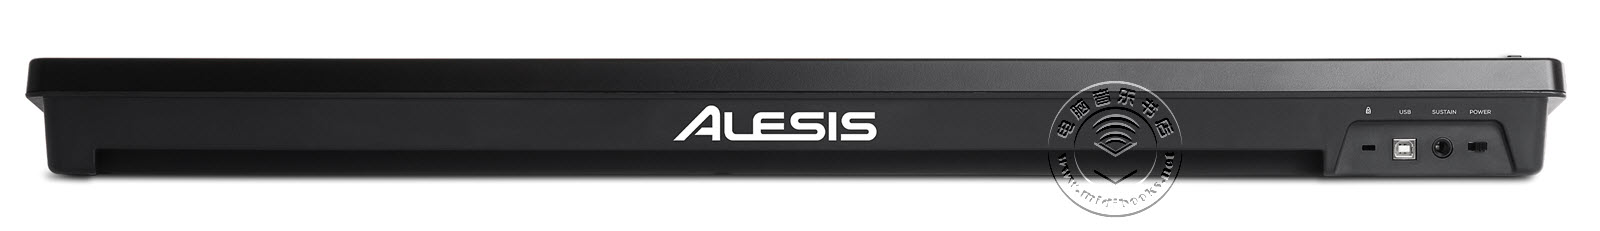 Alesis发布Q系列MIDI键盘控制器